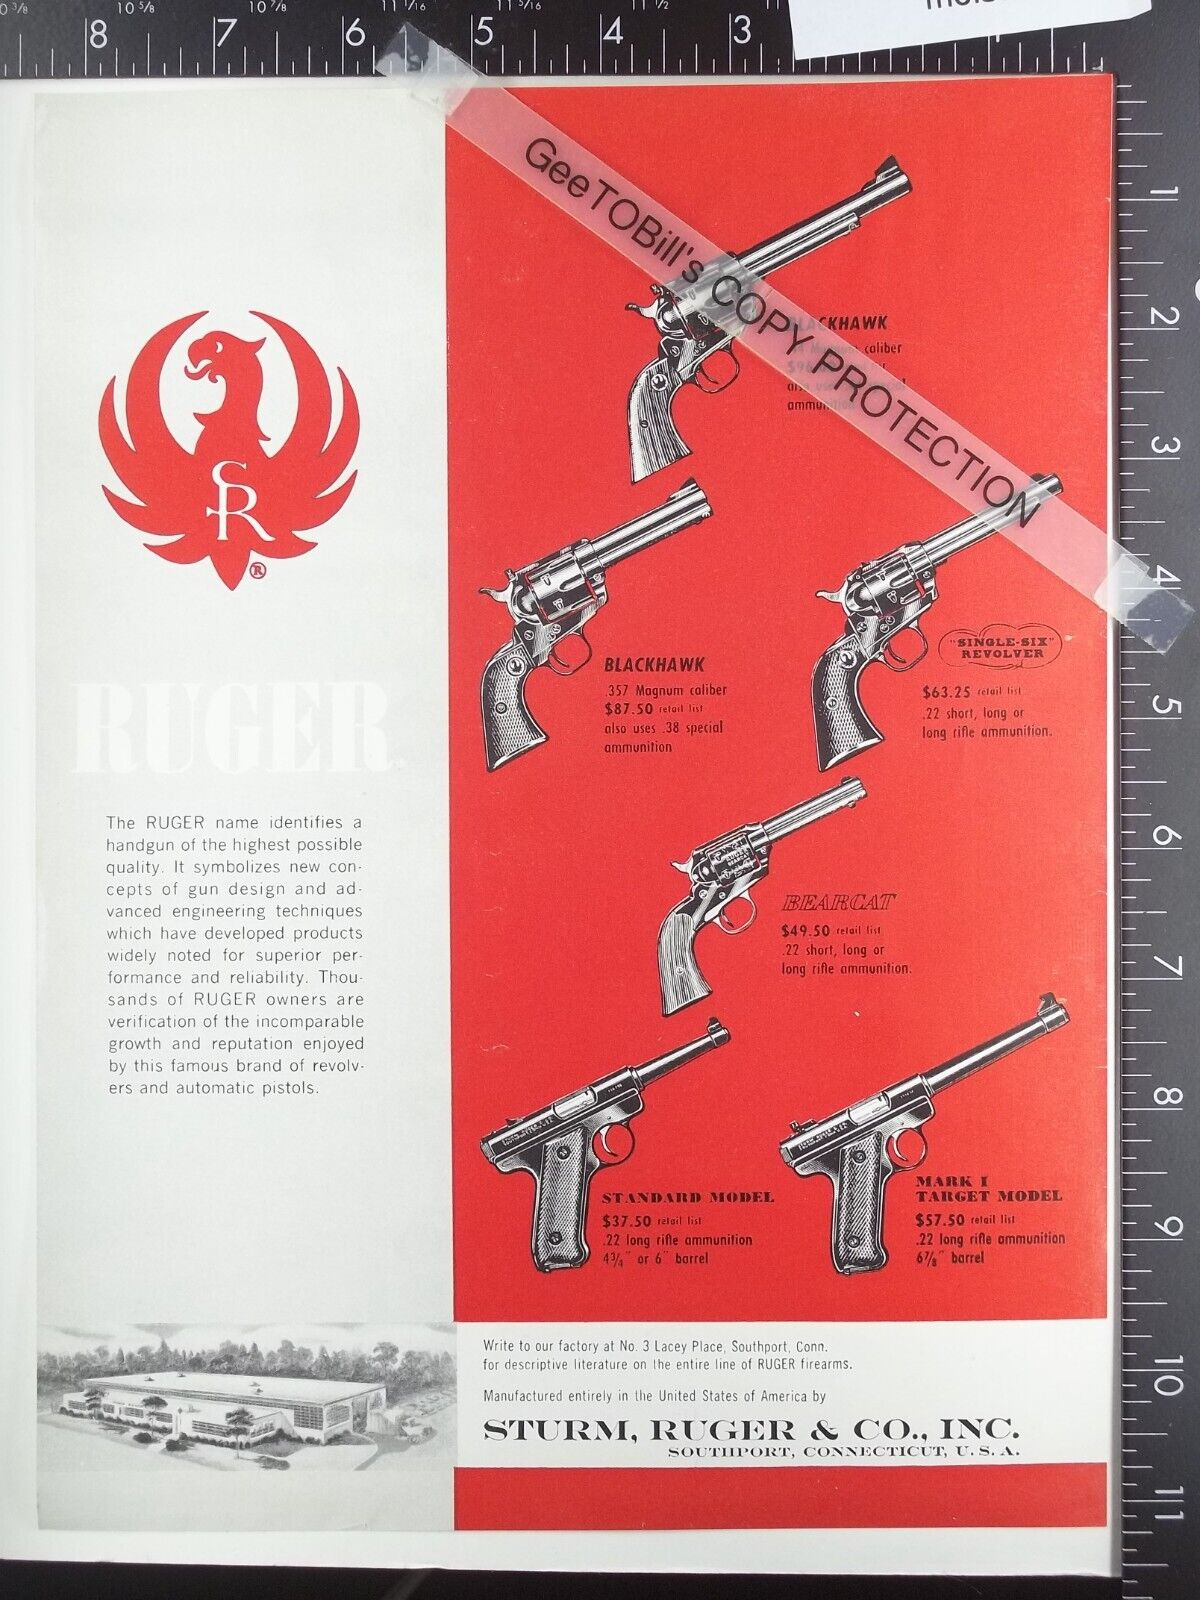 1959 ADVERTISING for Sturm Ruger & Co. new factory gun revolver pistol **DAMAGED